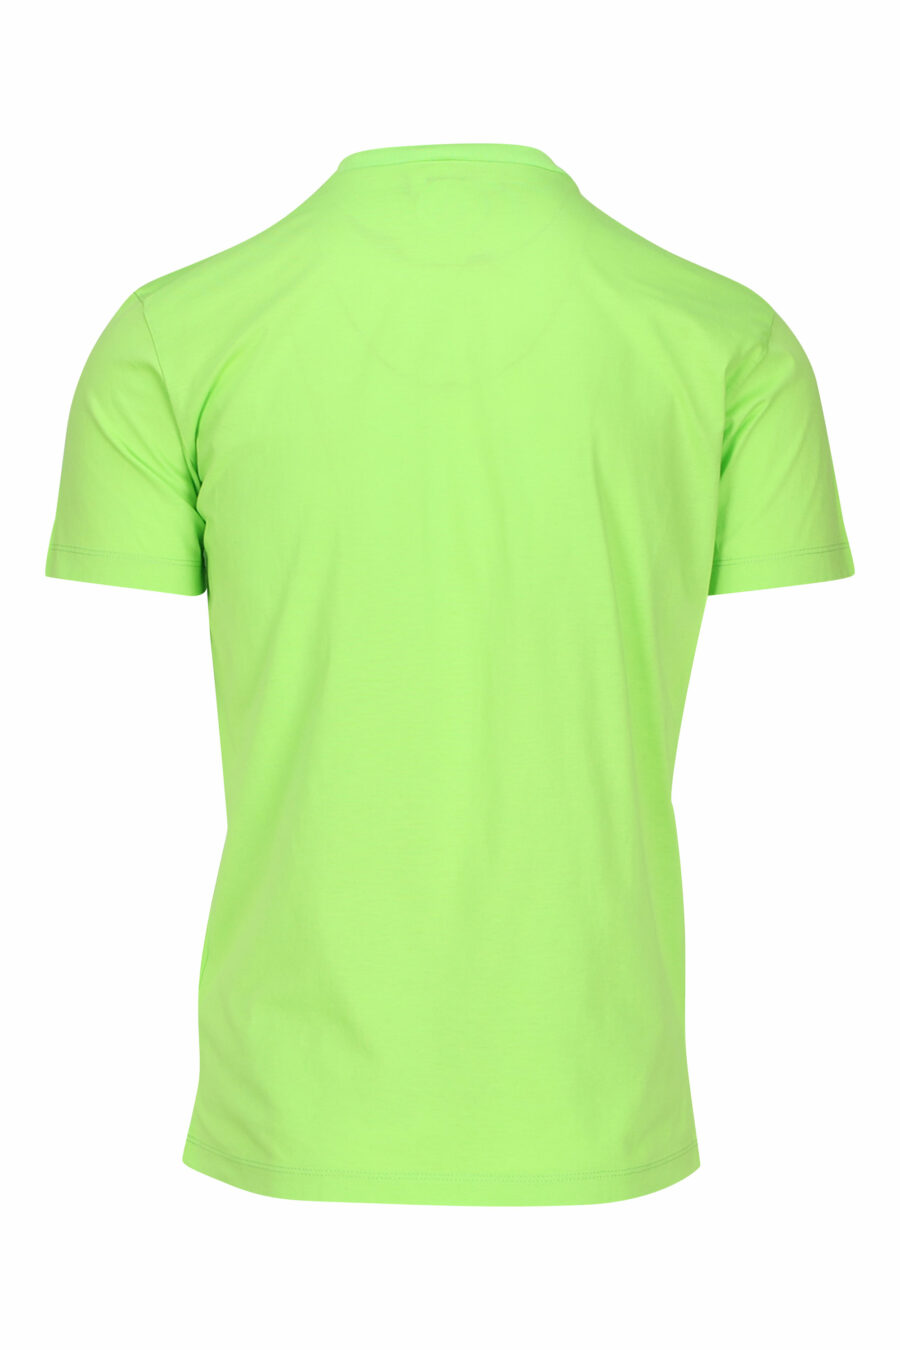 Lime green T-shirt with black "icon" maxilogo - 8054148035594 1